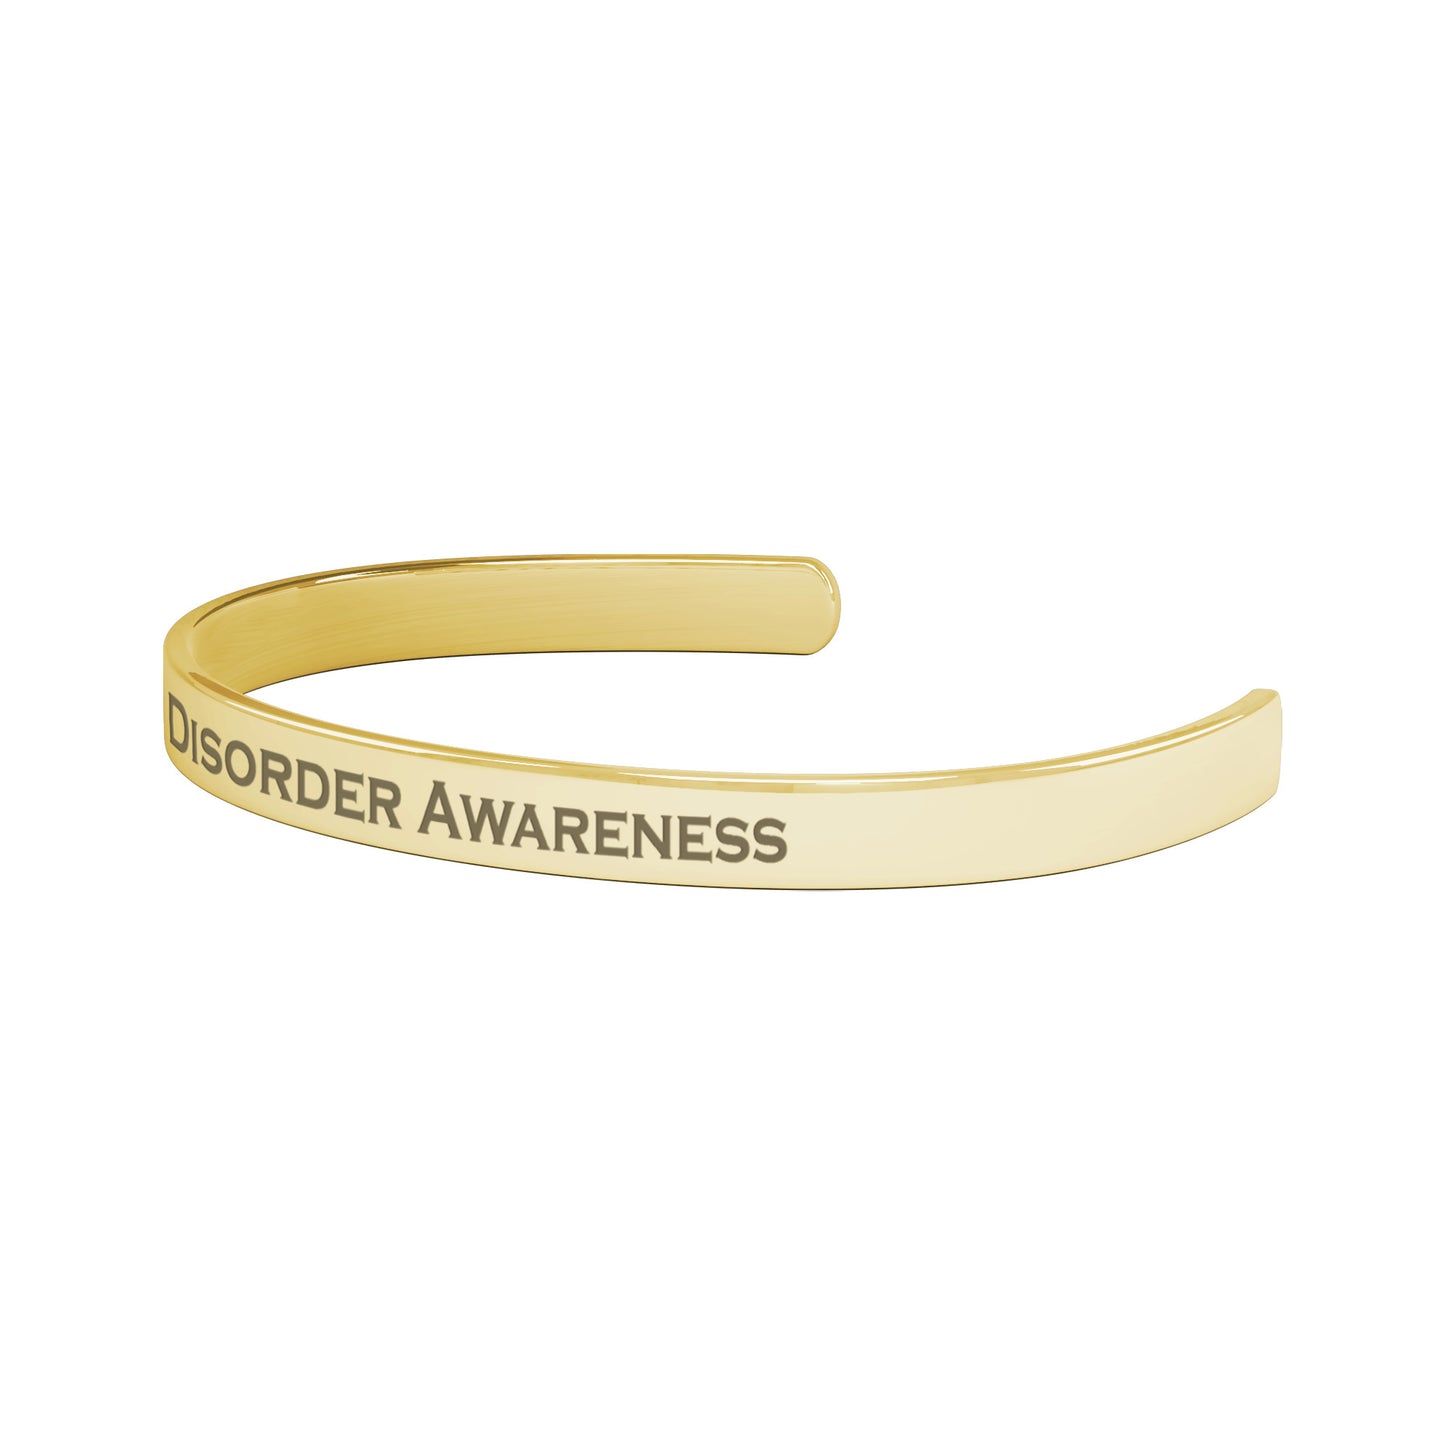 Personalized Bipolar Disorder Awareness Cuff Bracelet